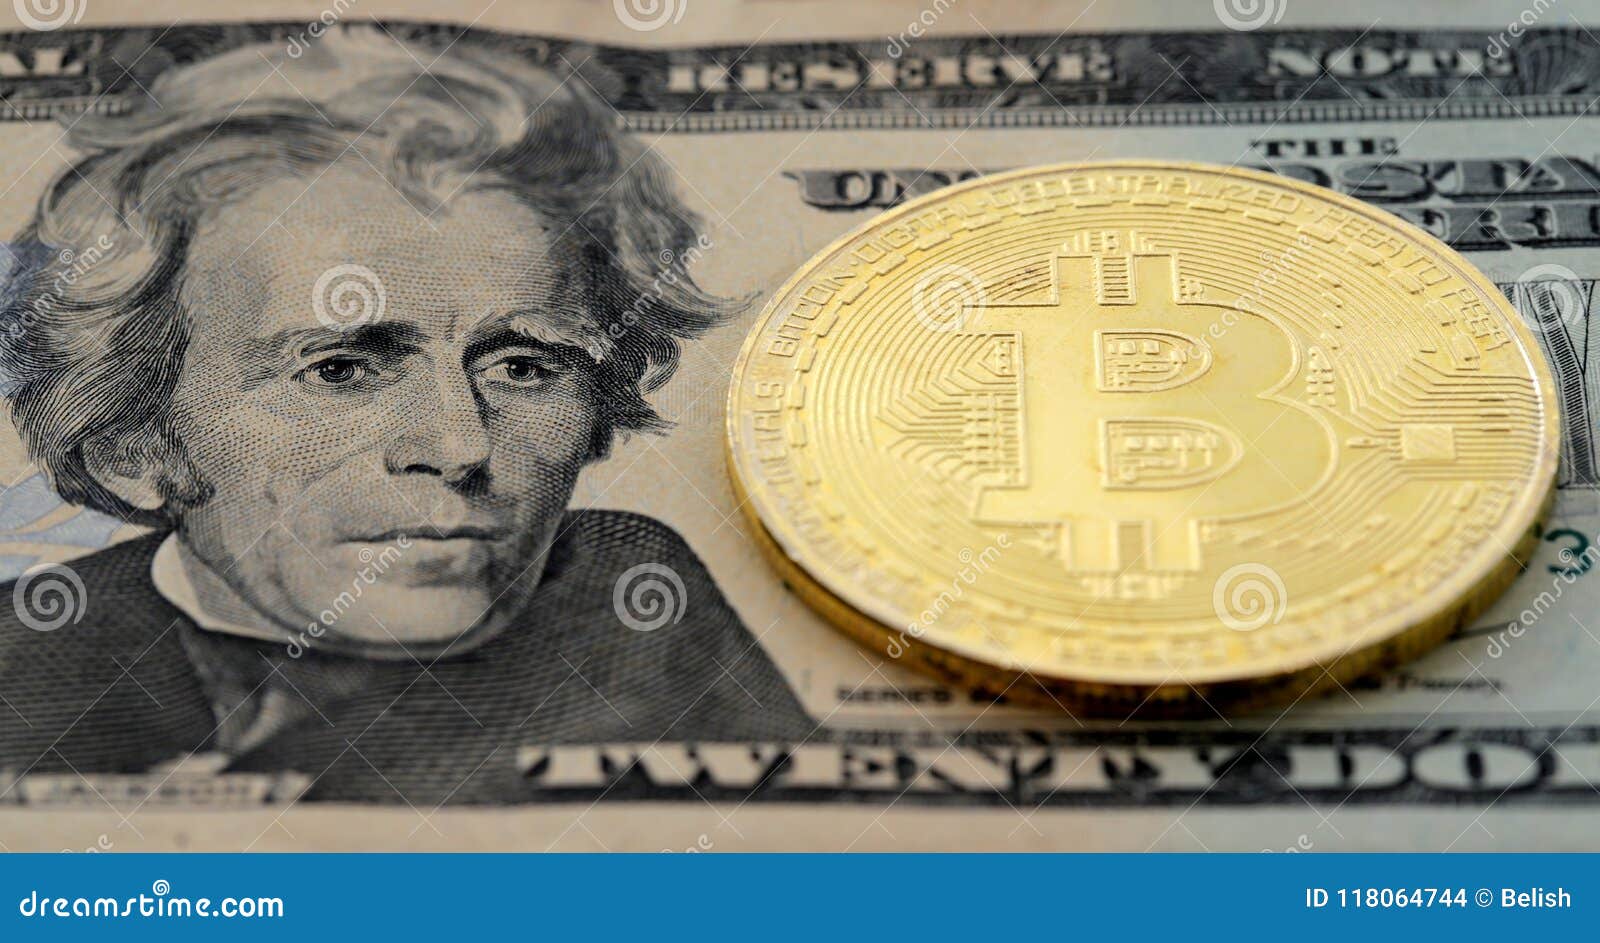 buy 20 dollars bitcoin